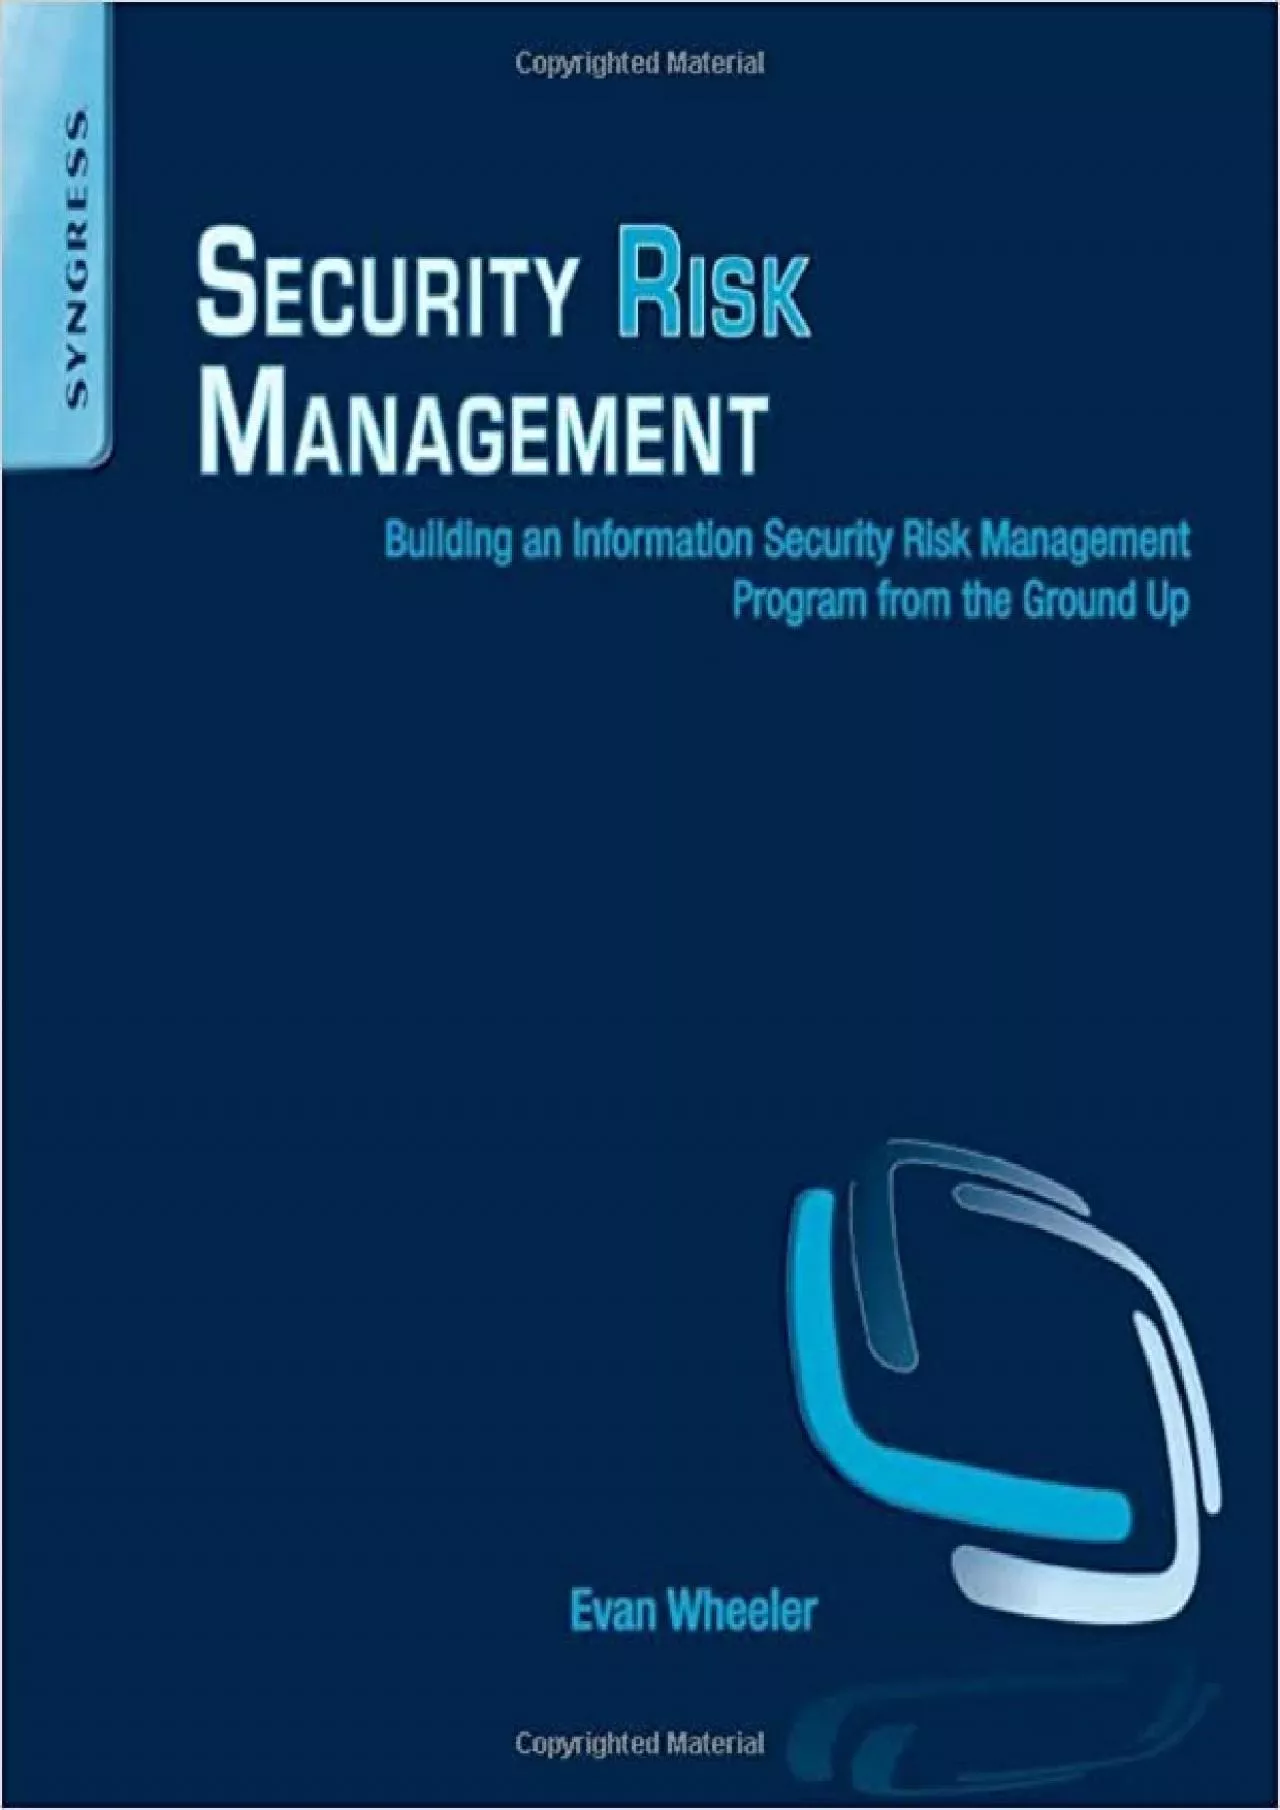 Security Risk Management: Building an Information Security Risk Management Program from